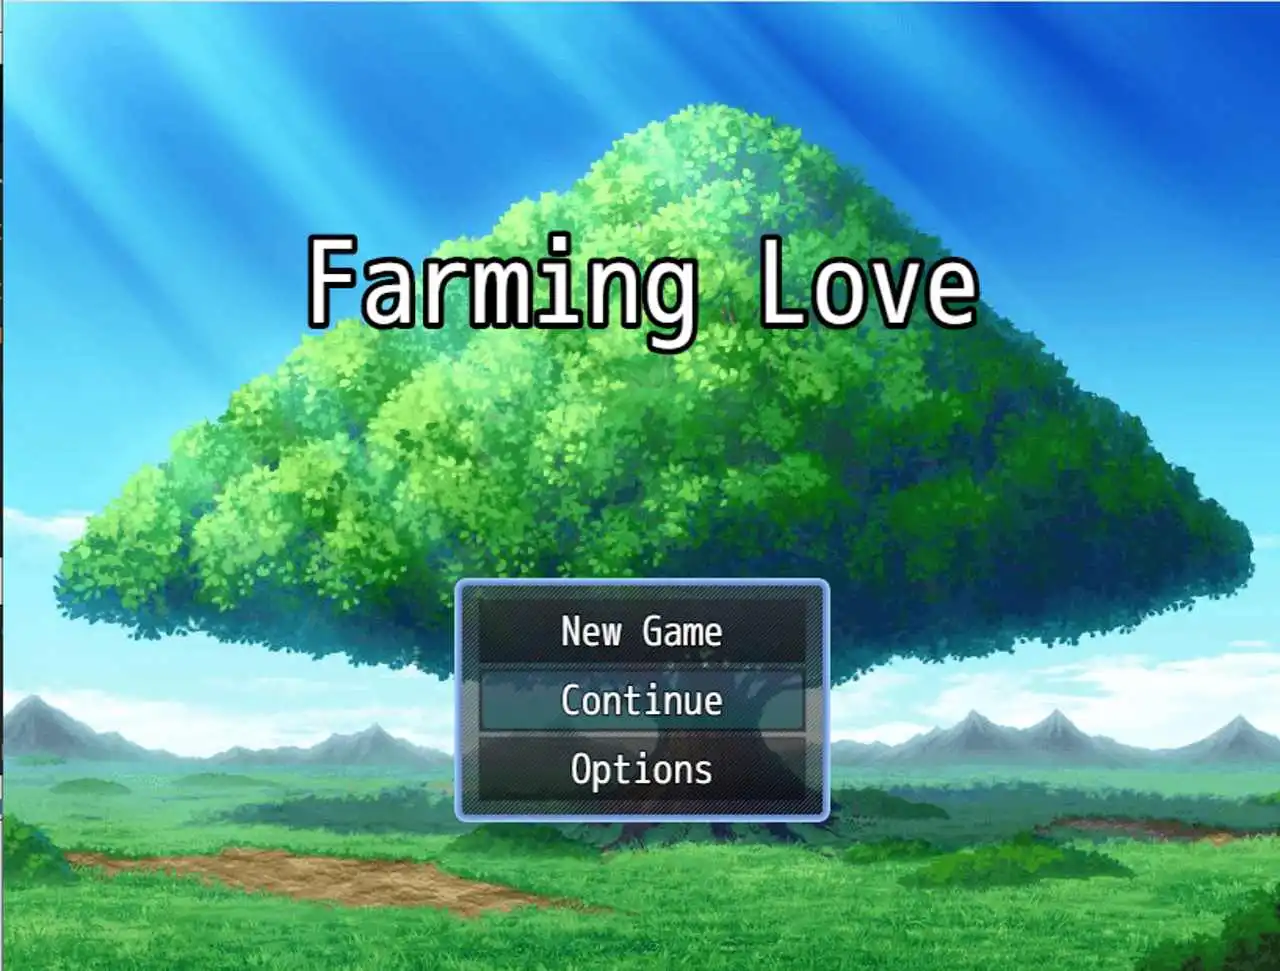 Farming love main image